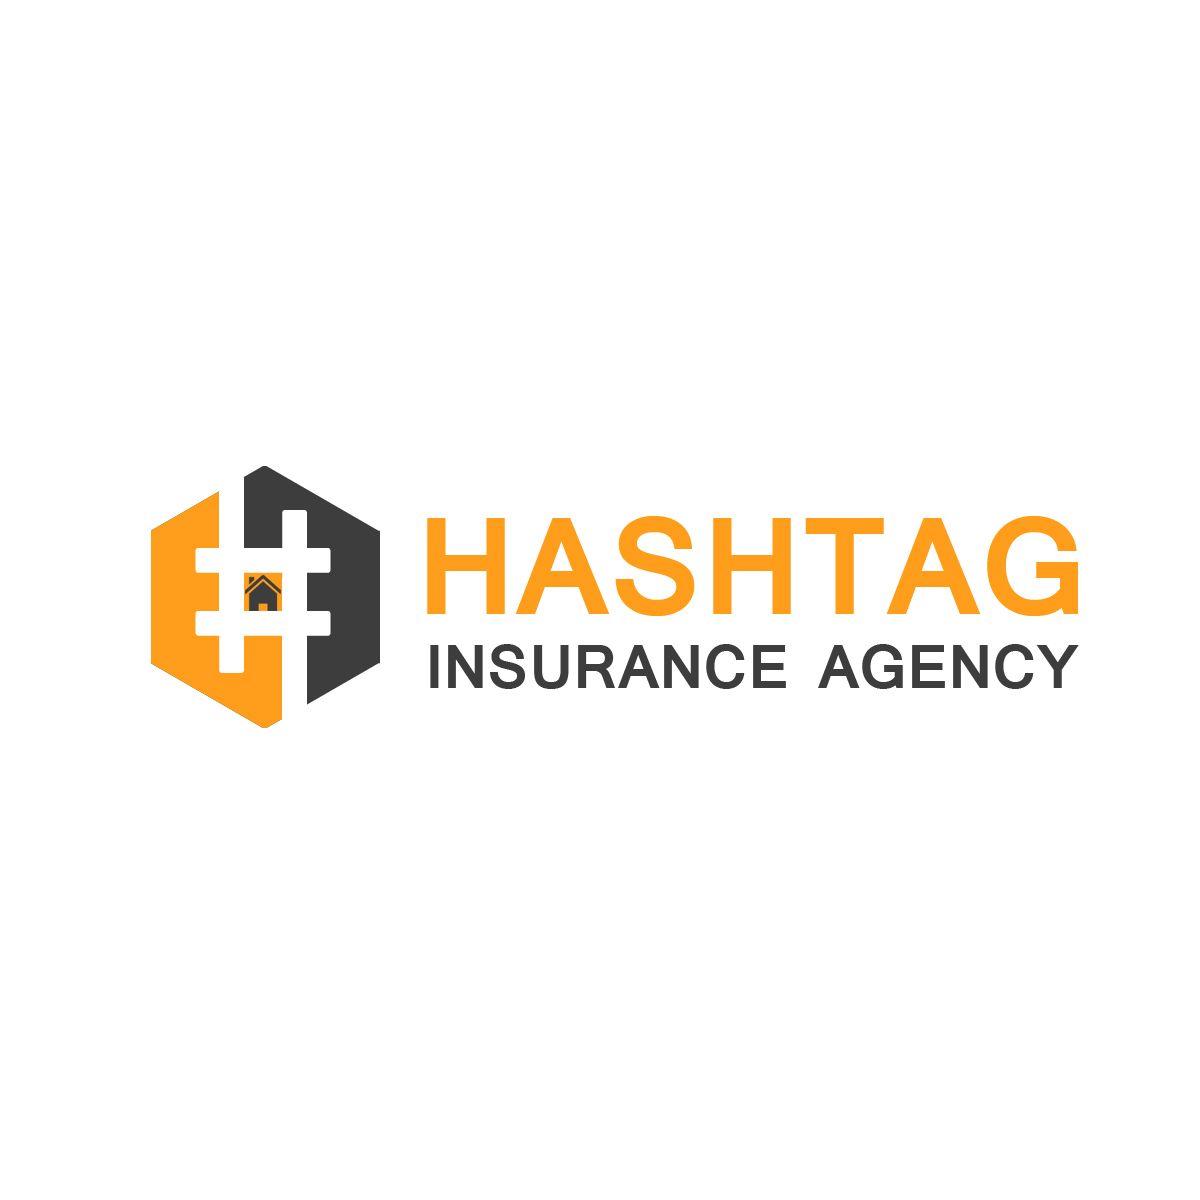 Hag Tag Logo - Insurance Logo Design for Hashtag Insurance Agency by Neela | Design ...